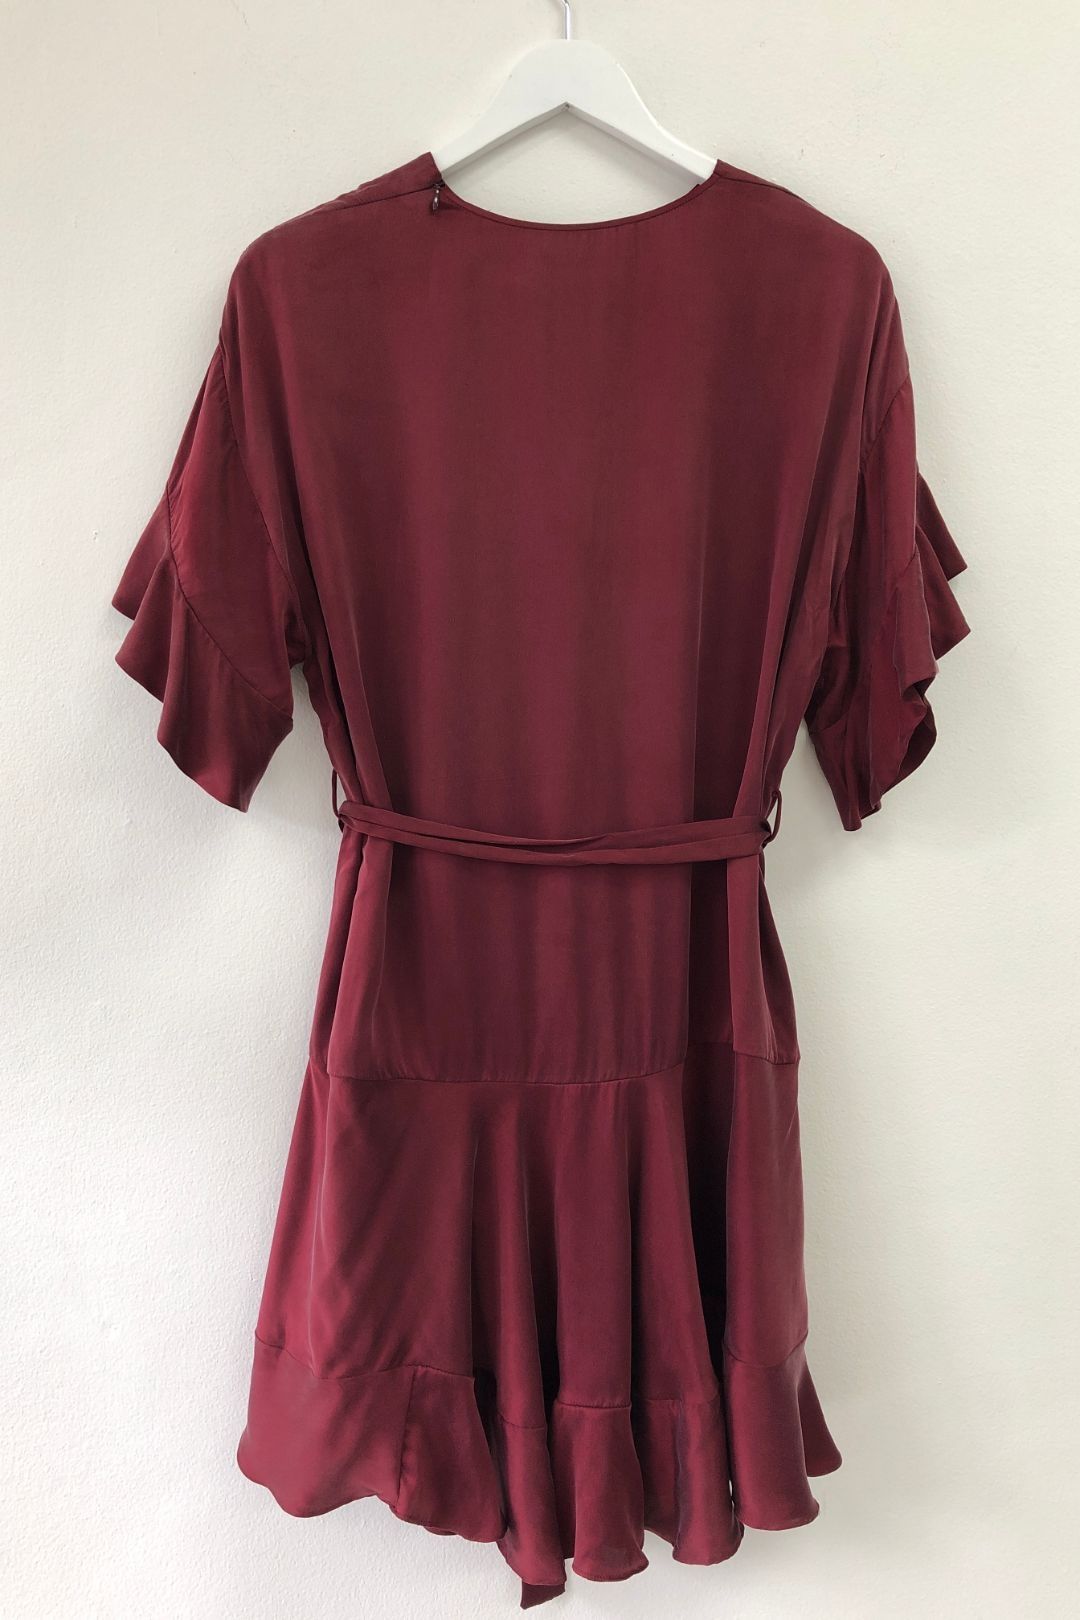 Zimmermann - Burgundy Sueded Flounce Silk Dress